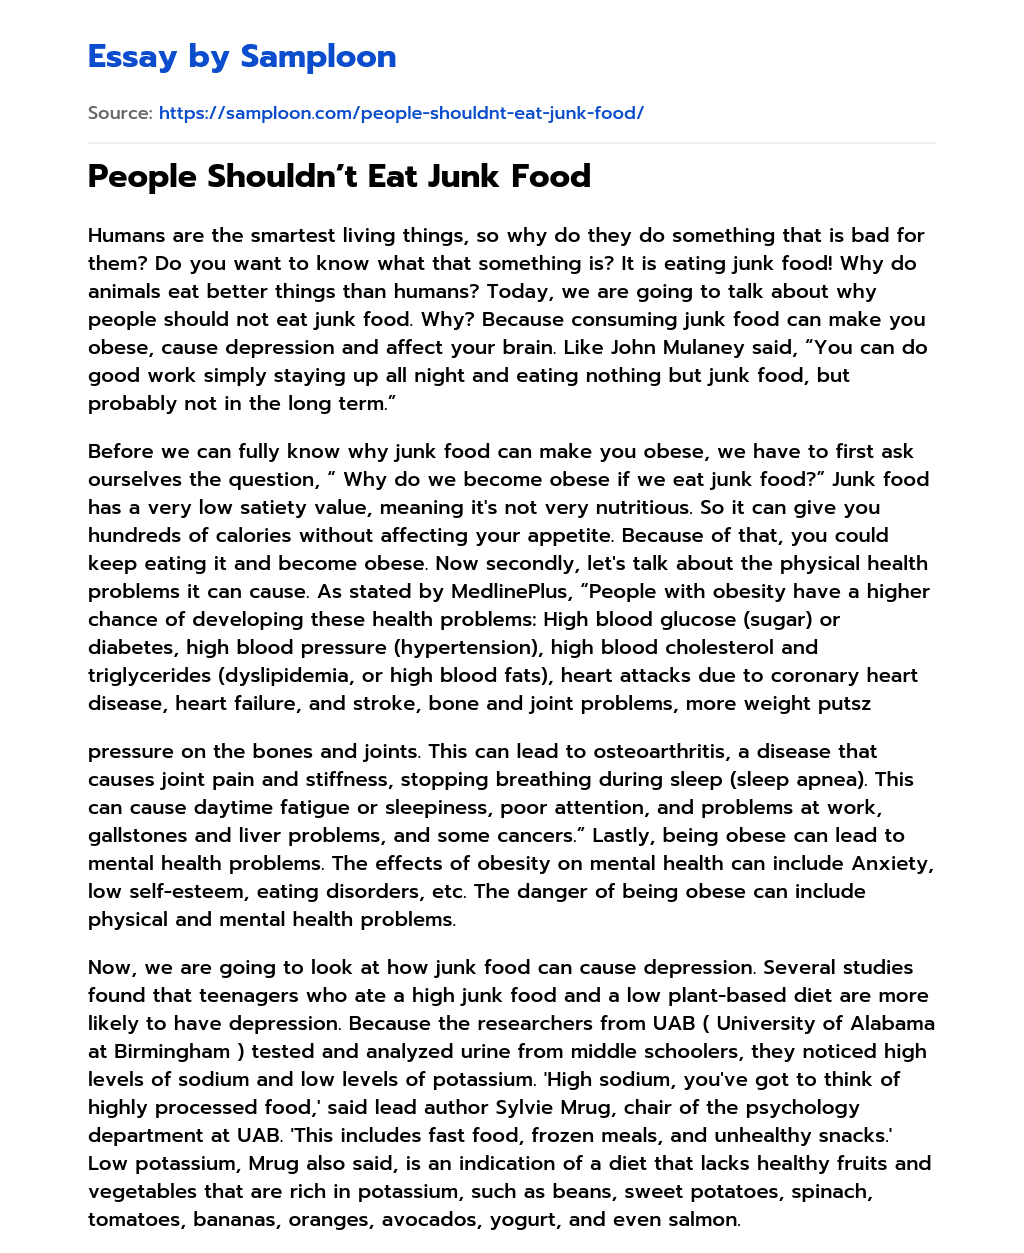 People Shouldn’t Eat Junk Food essay